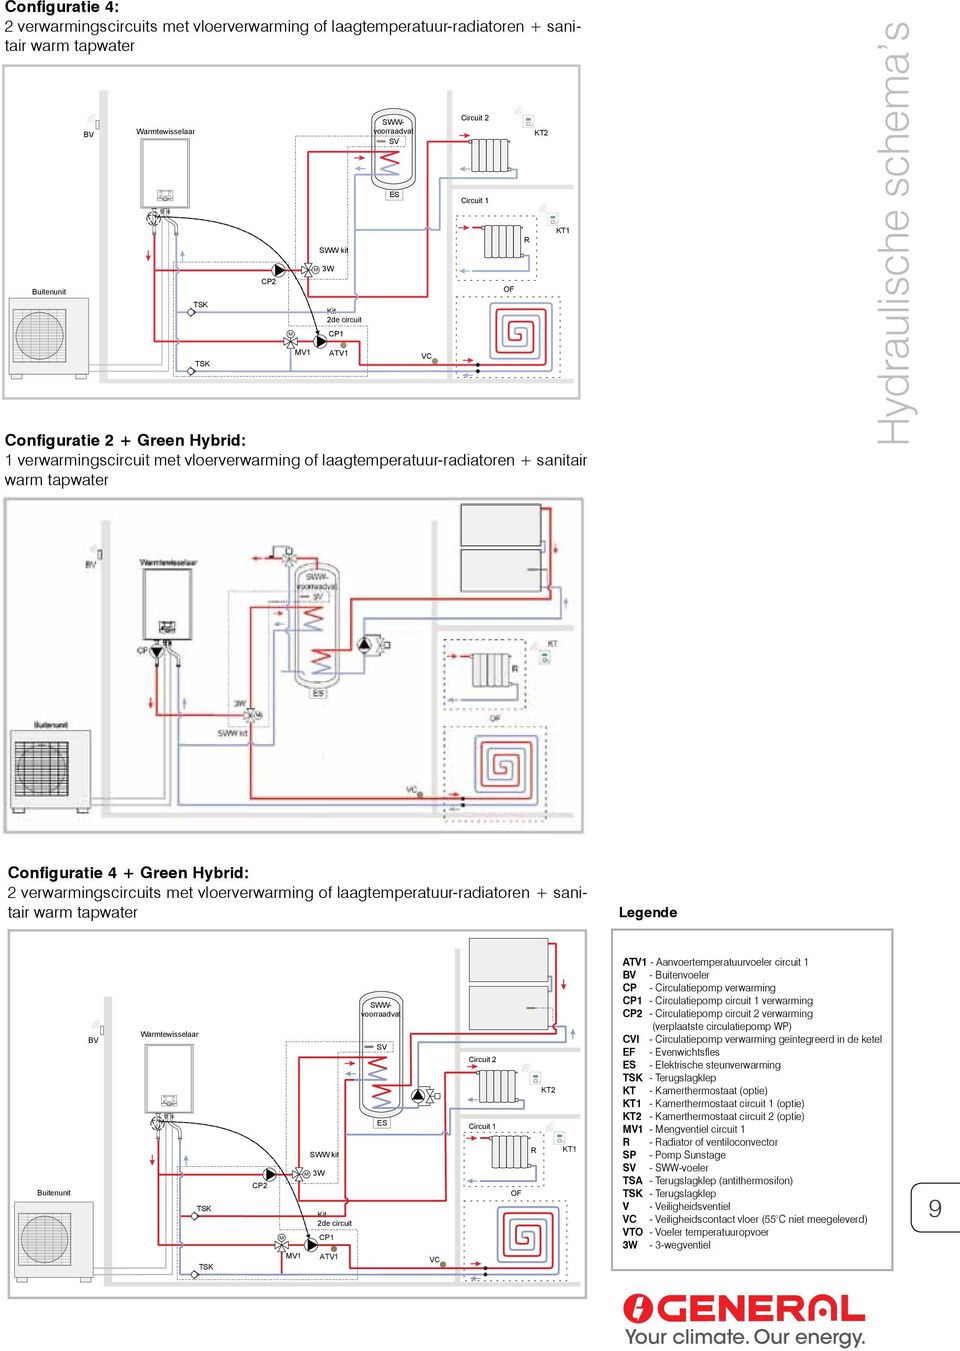 Veiligheidscontact vloerverwarming warm tapwater SWW kit M 3W Kit 2de circuit CP1 CP1 - Circulatiepomp circuit 1 verwarming SV - SWW-voeler CP2 - Circulatiepomp circuit 2 verwarming (verplaatste